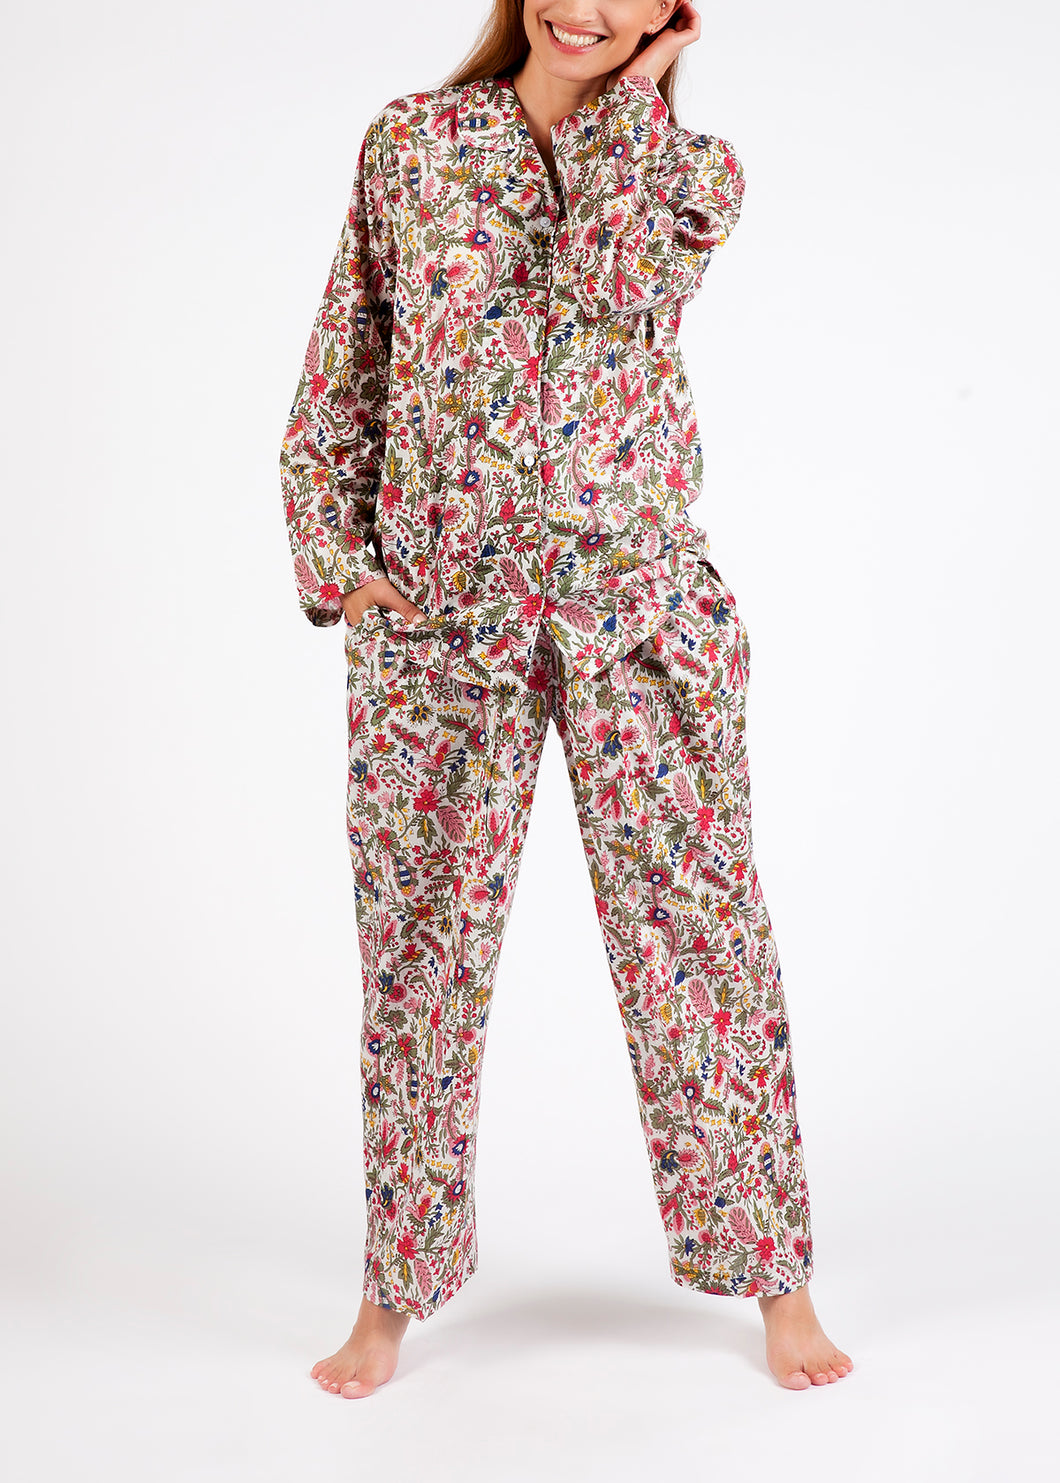 Cotton Pyjamas - Long Set - Floral Mixed colours